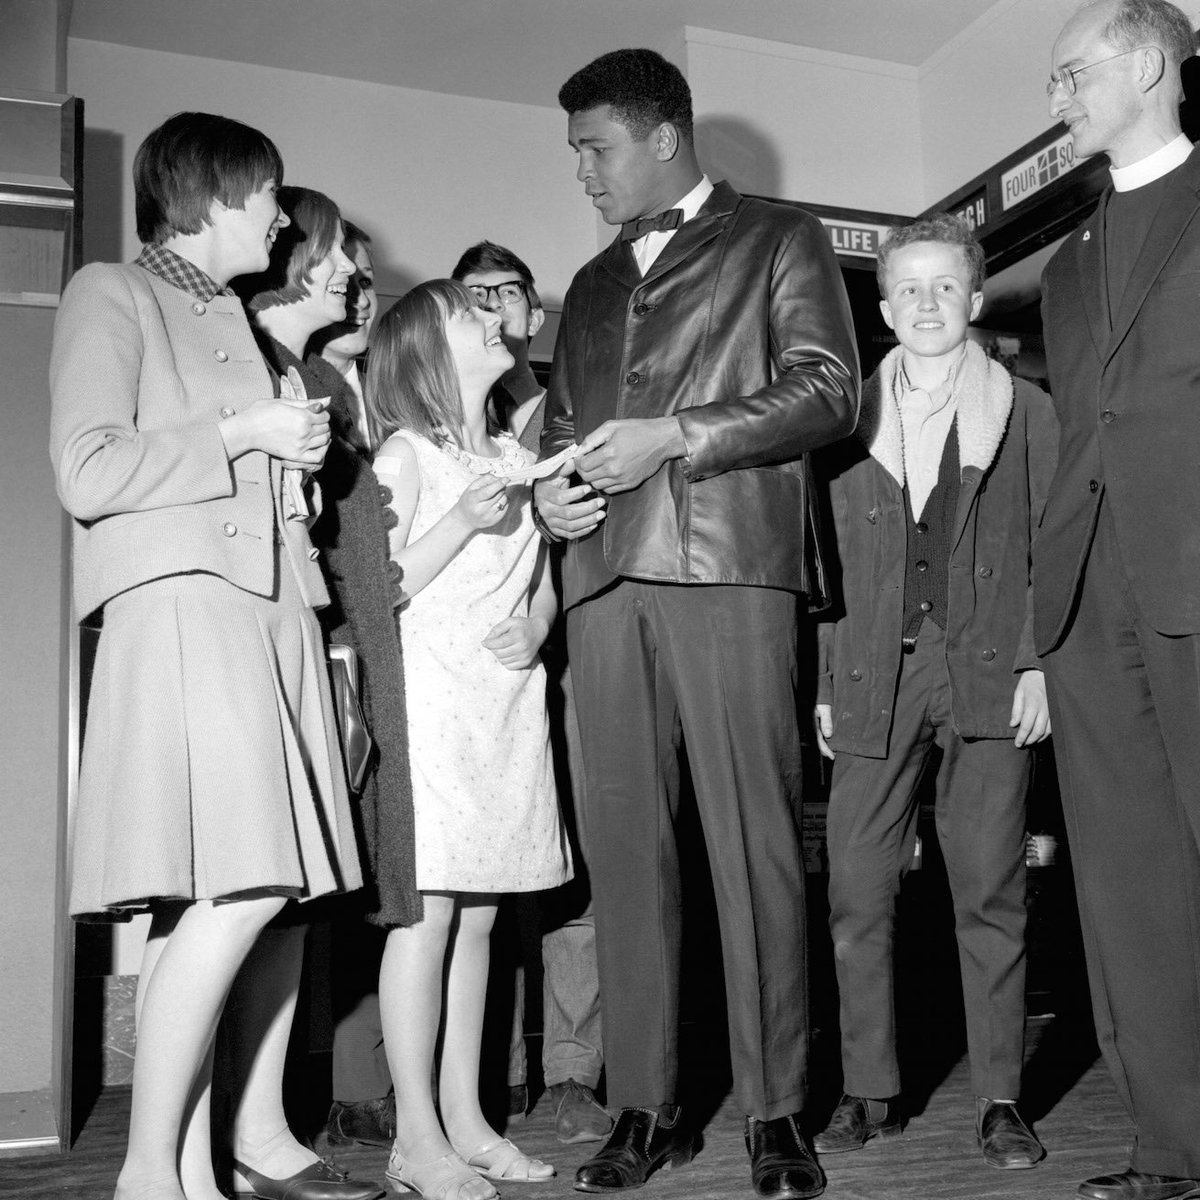 Rob Baker Muhammad Ali At Blackheath Youth Club May 1966 T Co 6cr396r5fw